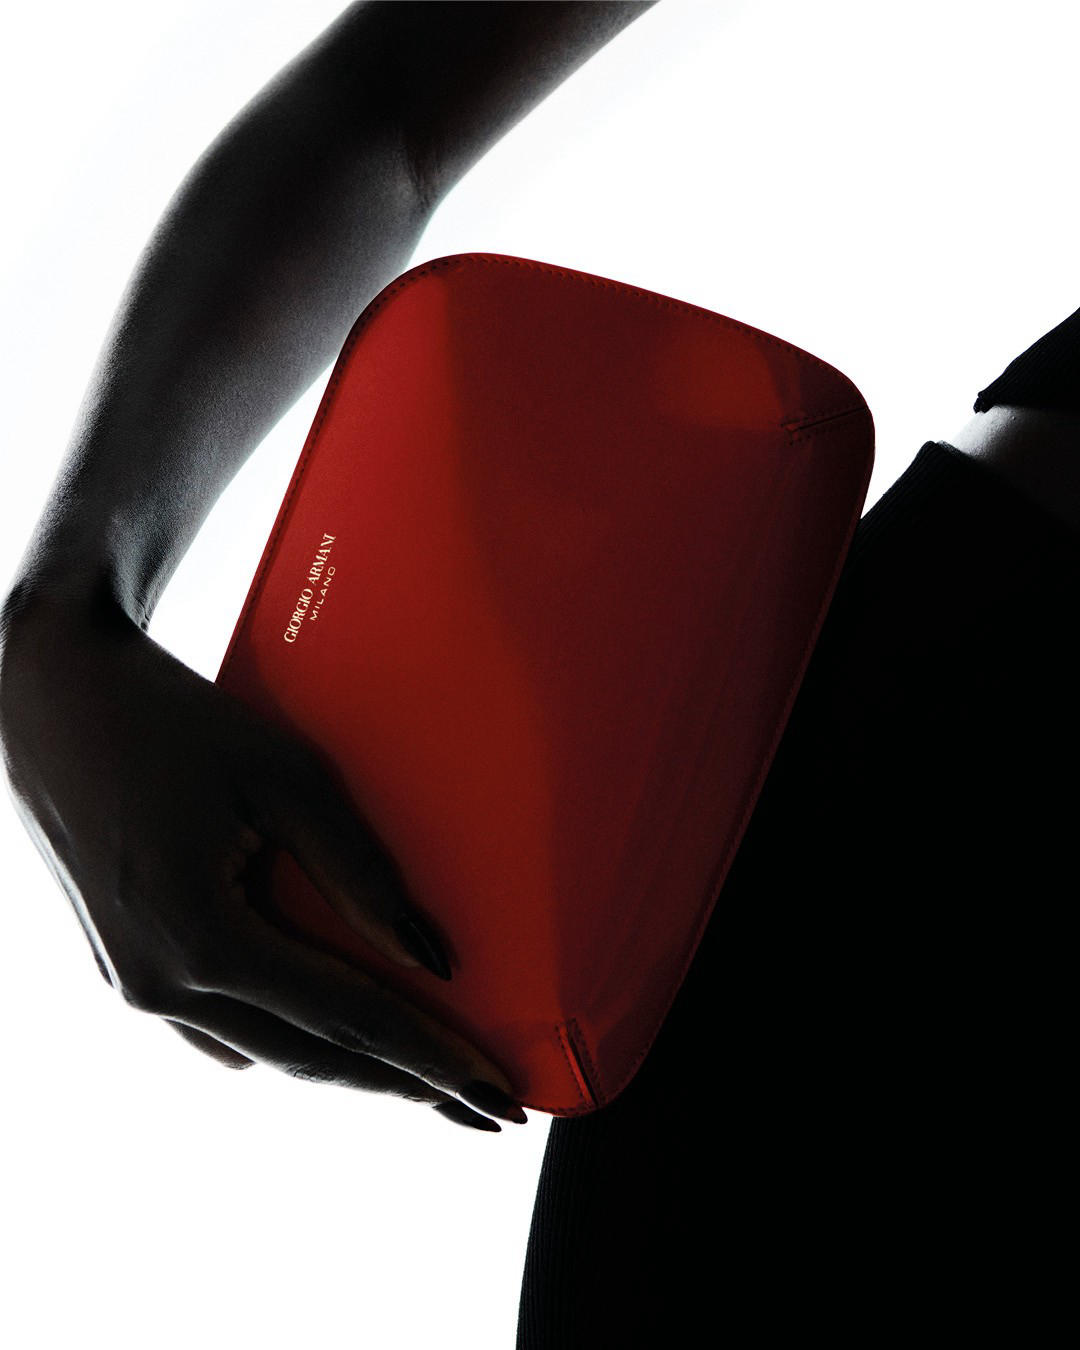 Giorgio Armani - Simply red